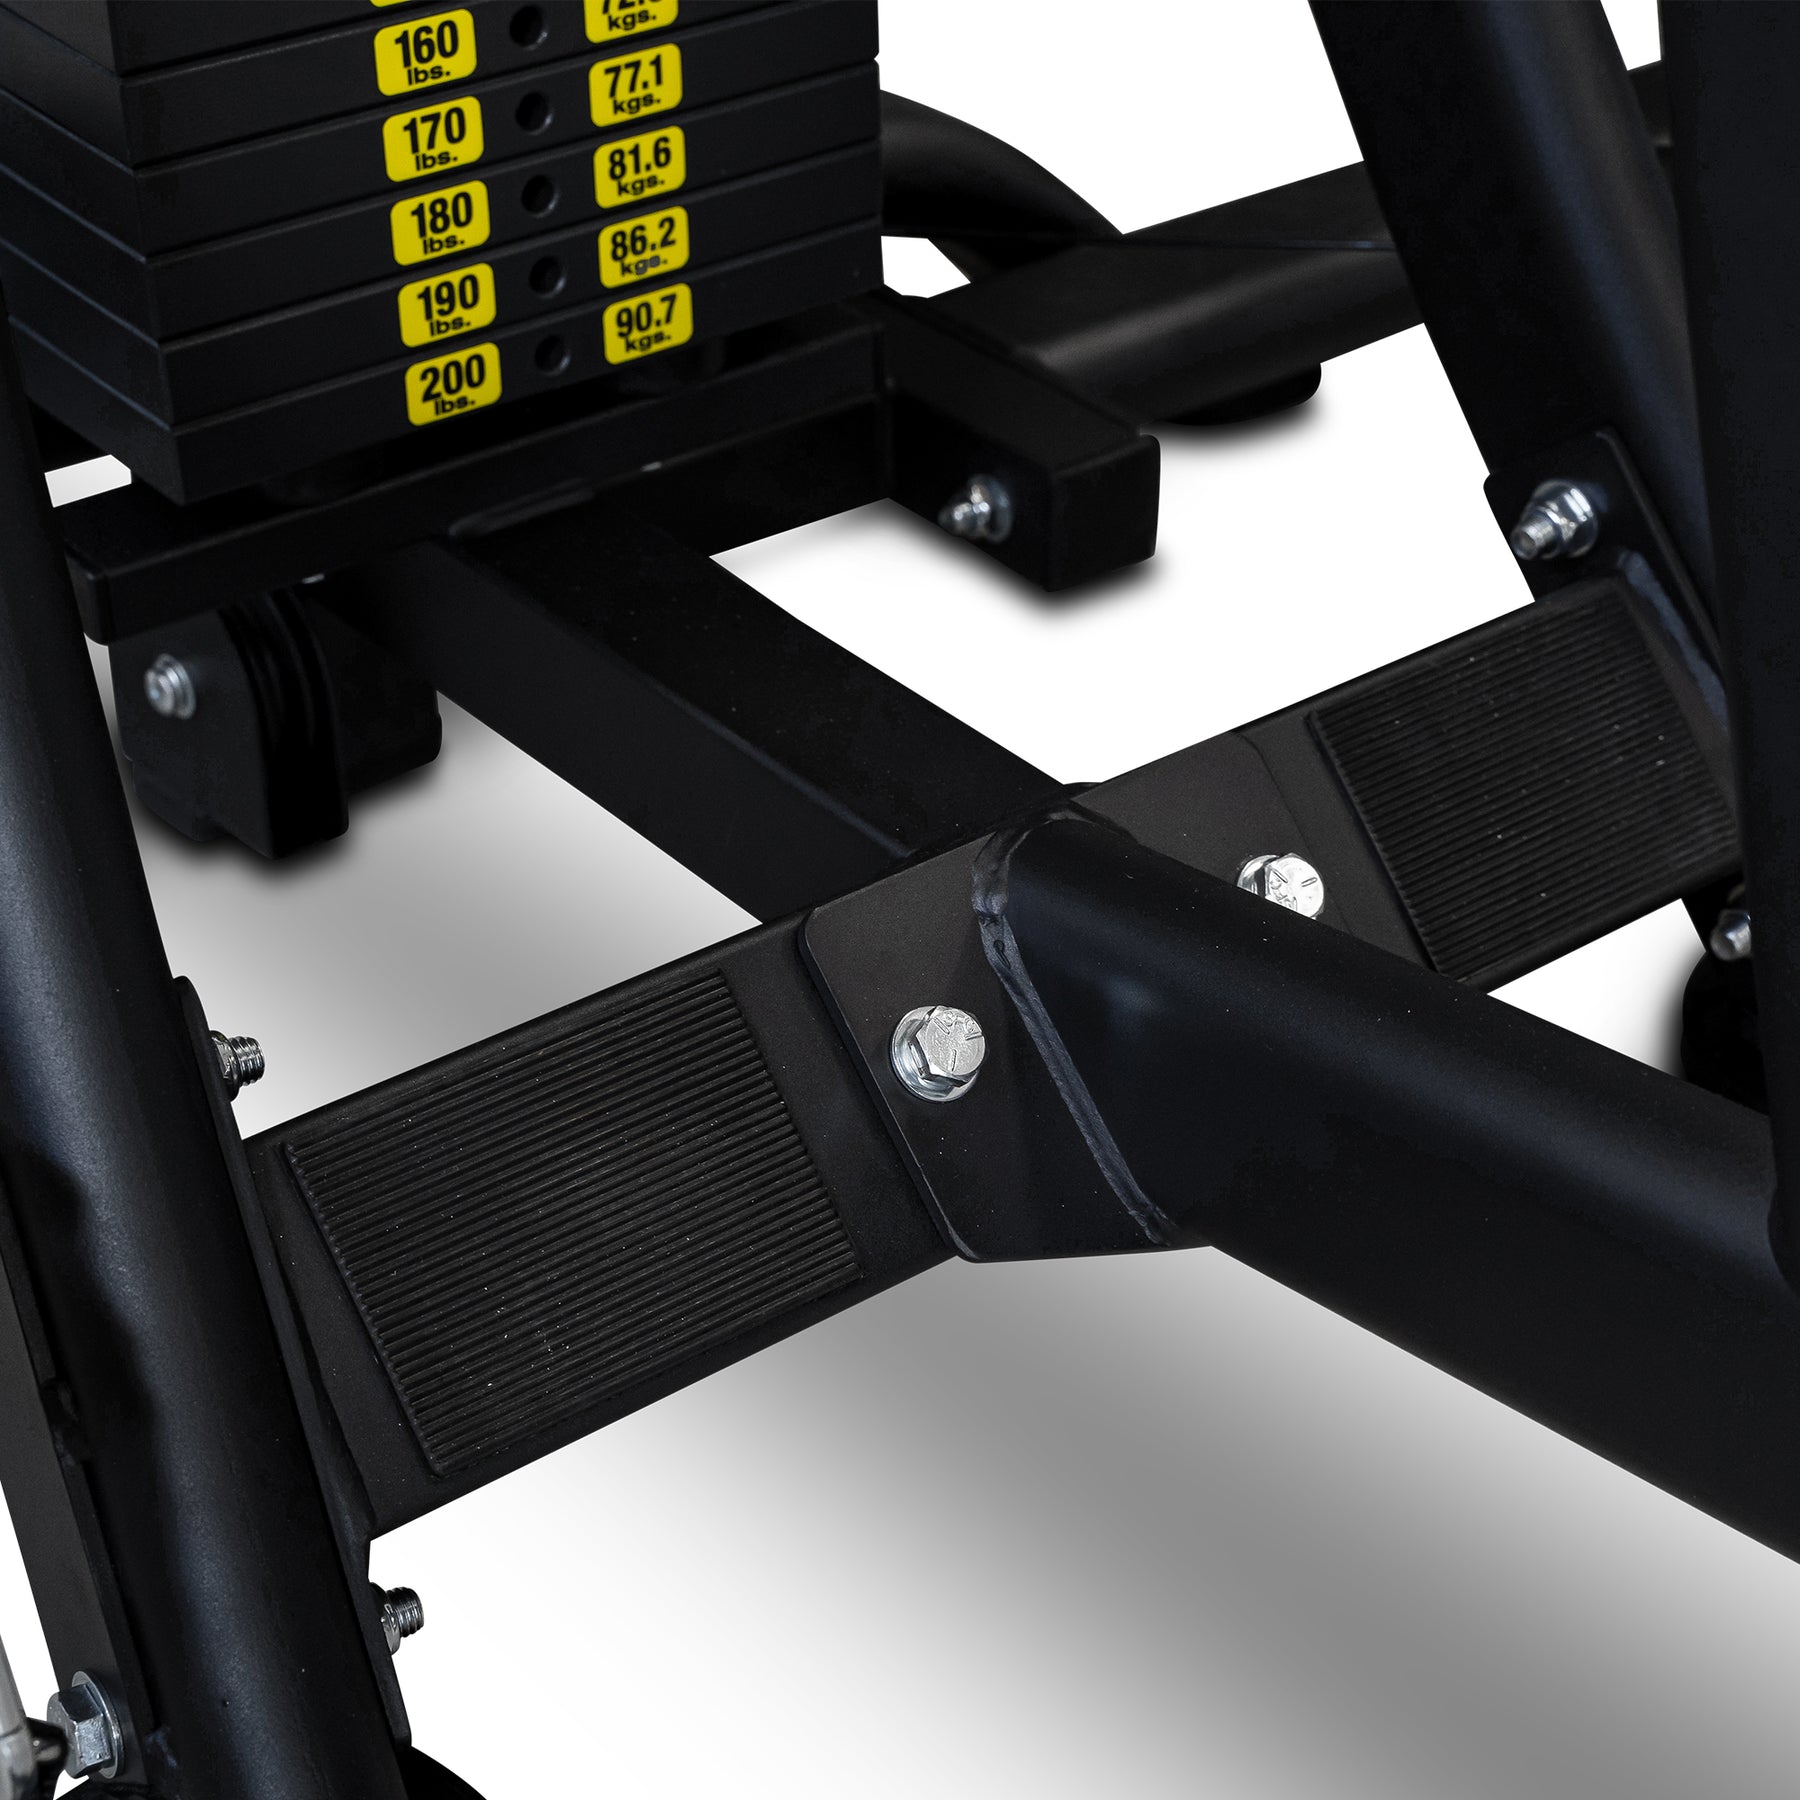 Reeplex Commercial Multi-Gym with Leg Press Machine